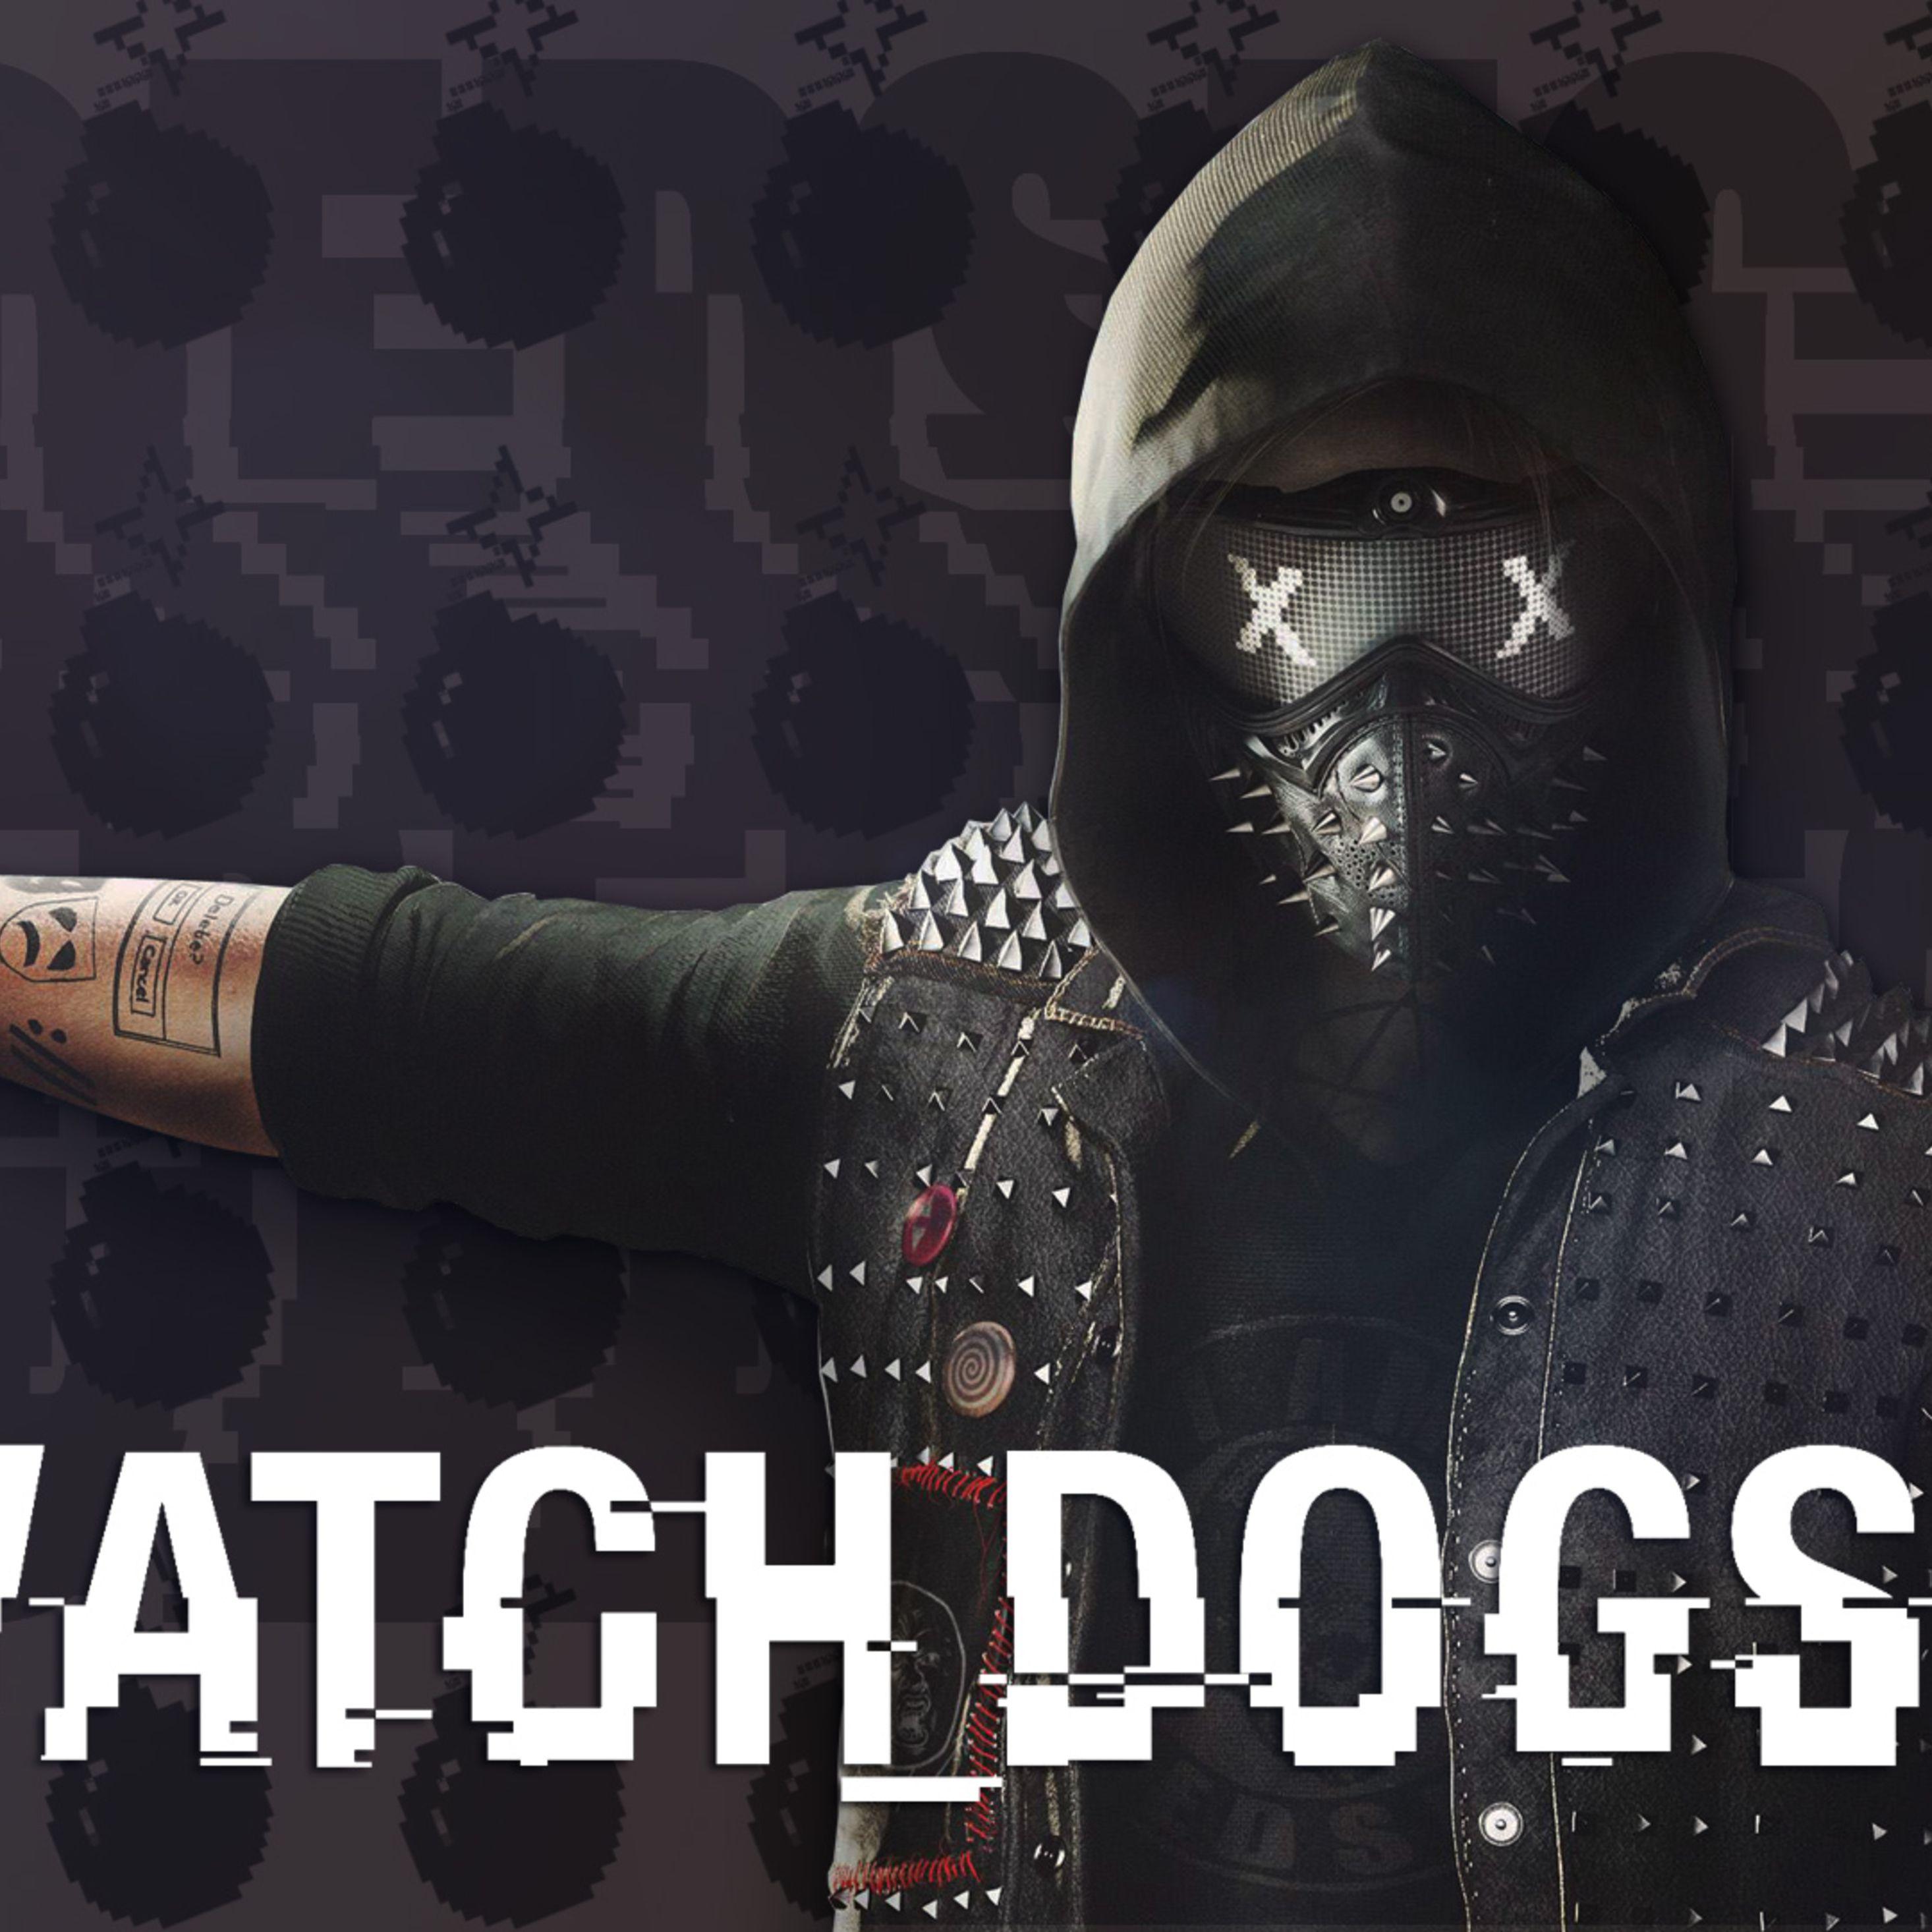 Watch Dogs 2 4k Wallpapers Top Free Watch Dogs 2 4k